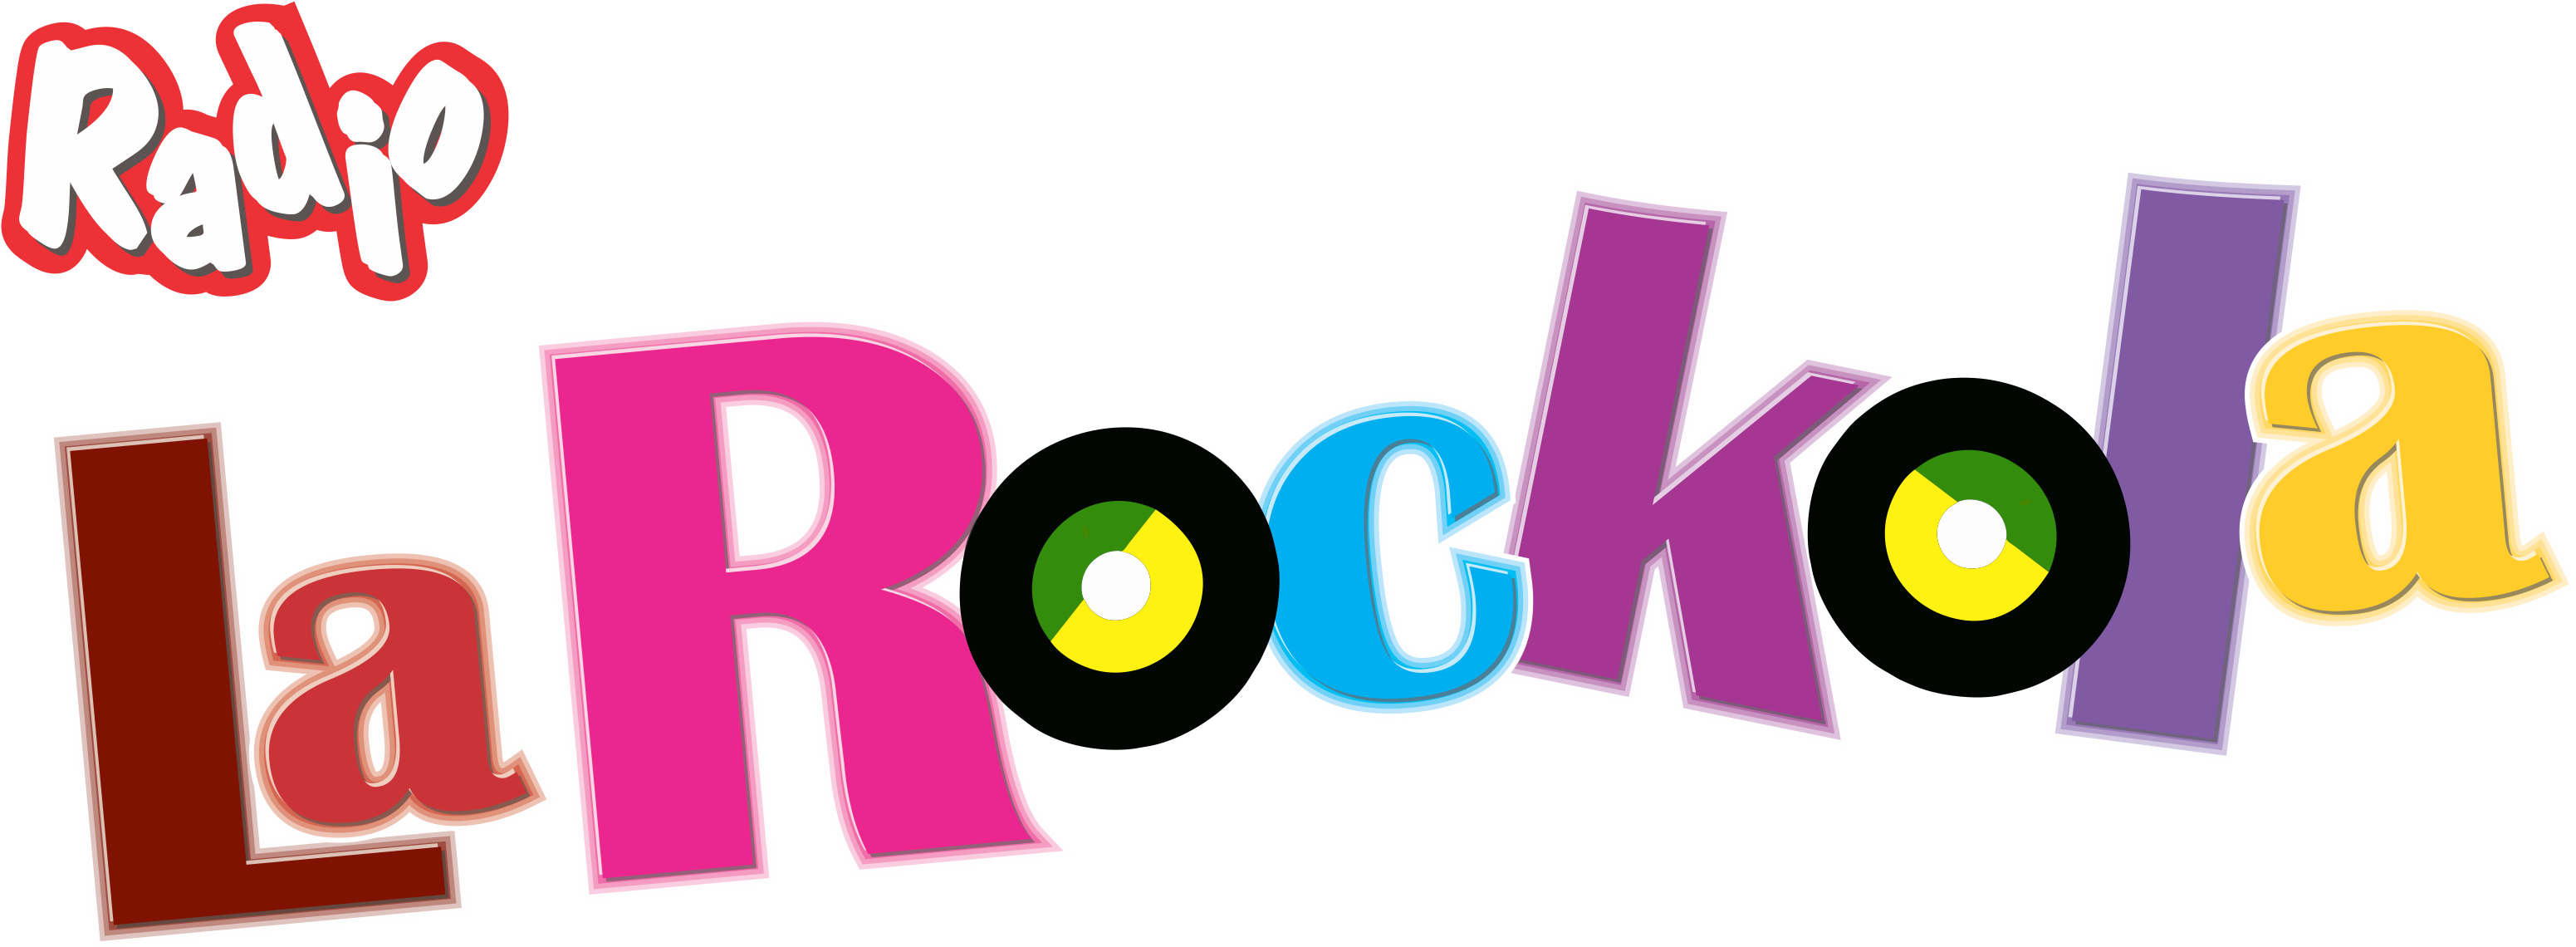 La Rockola - Graphic Design (3300x1171)